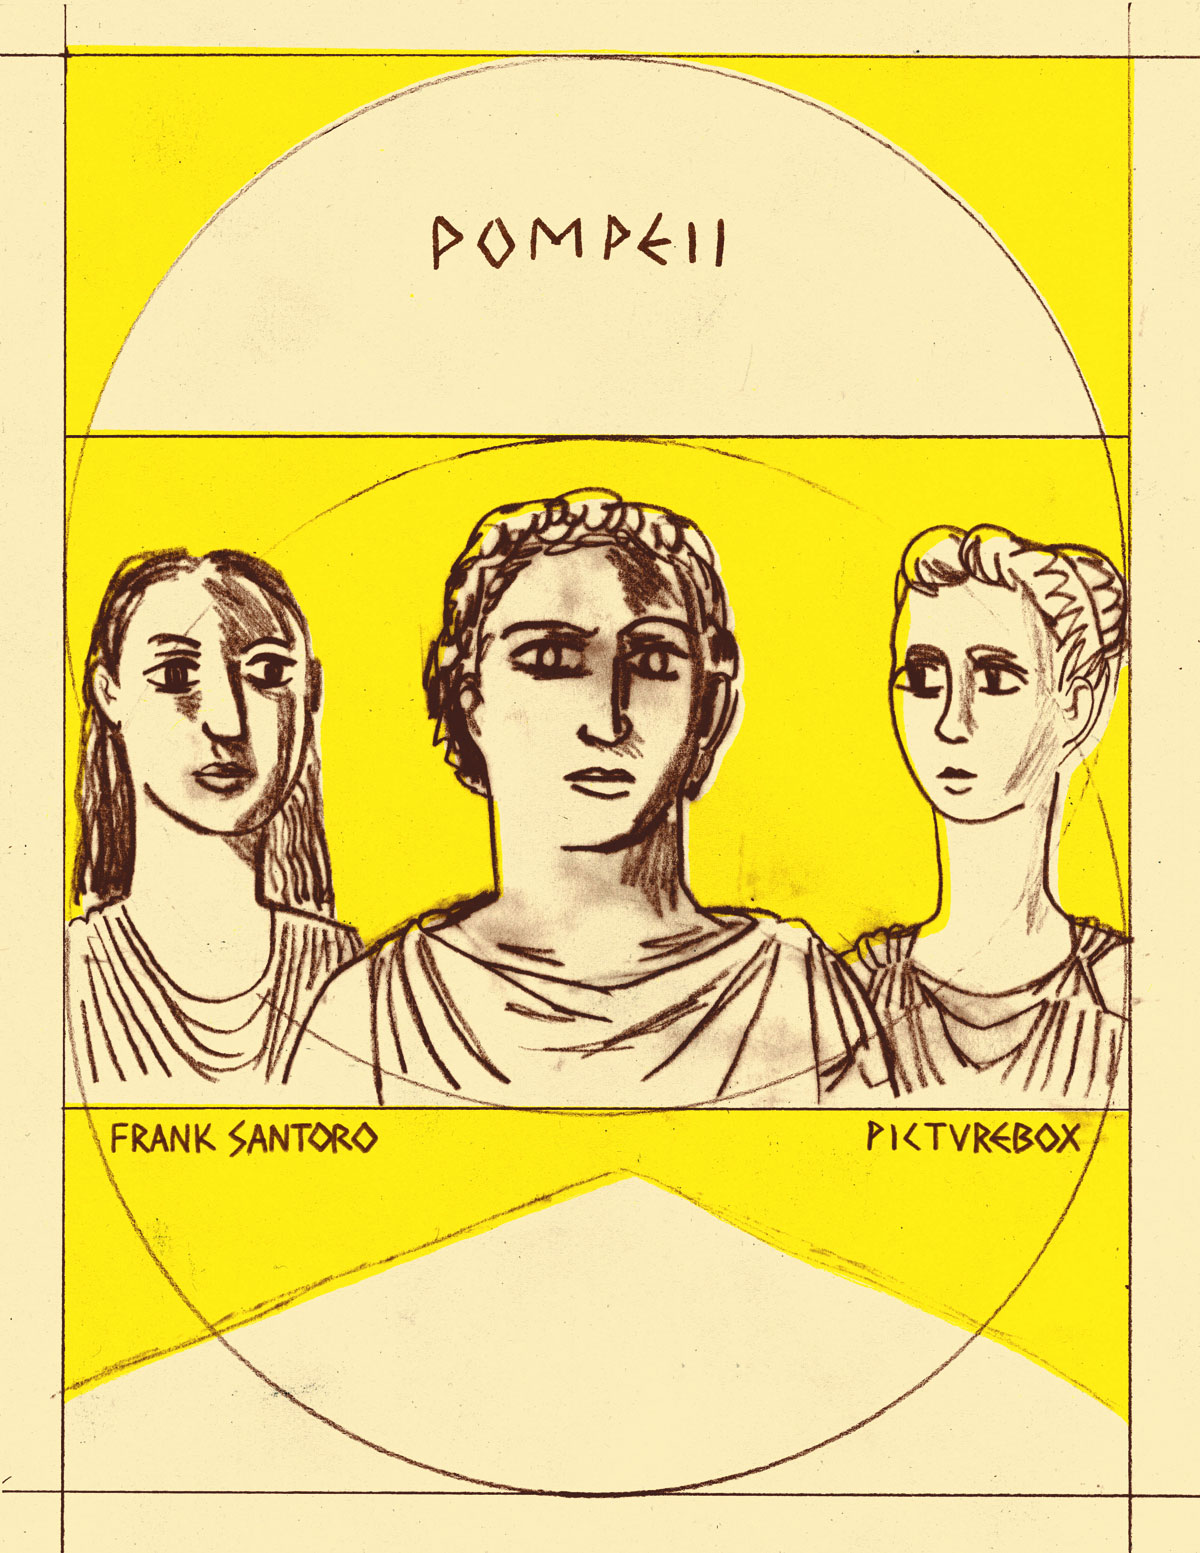 Pompeii comic by Frank Santoro